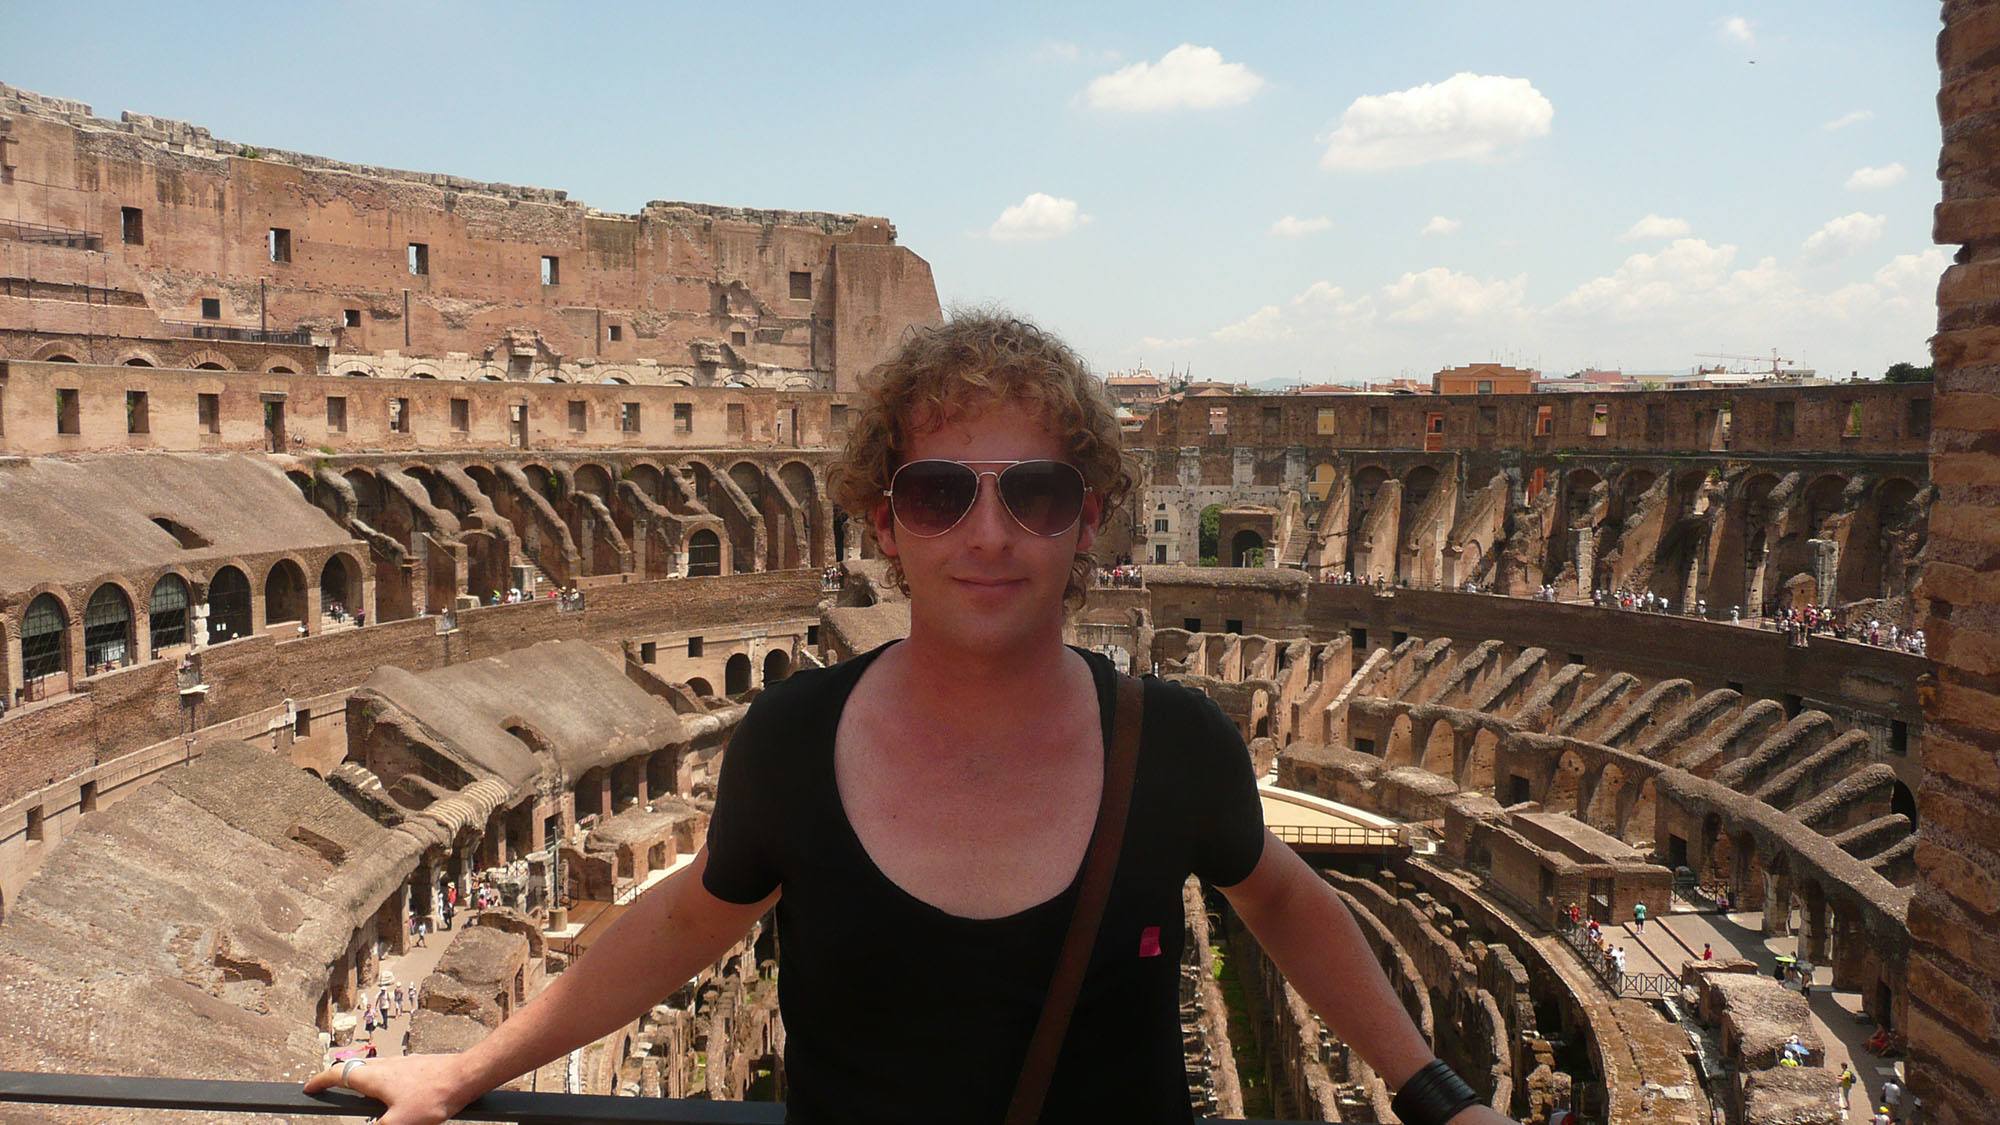 Ben inside the Colosseum Rome Italy